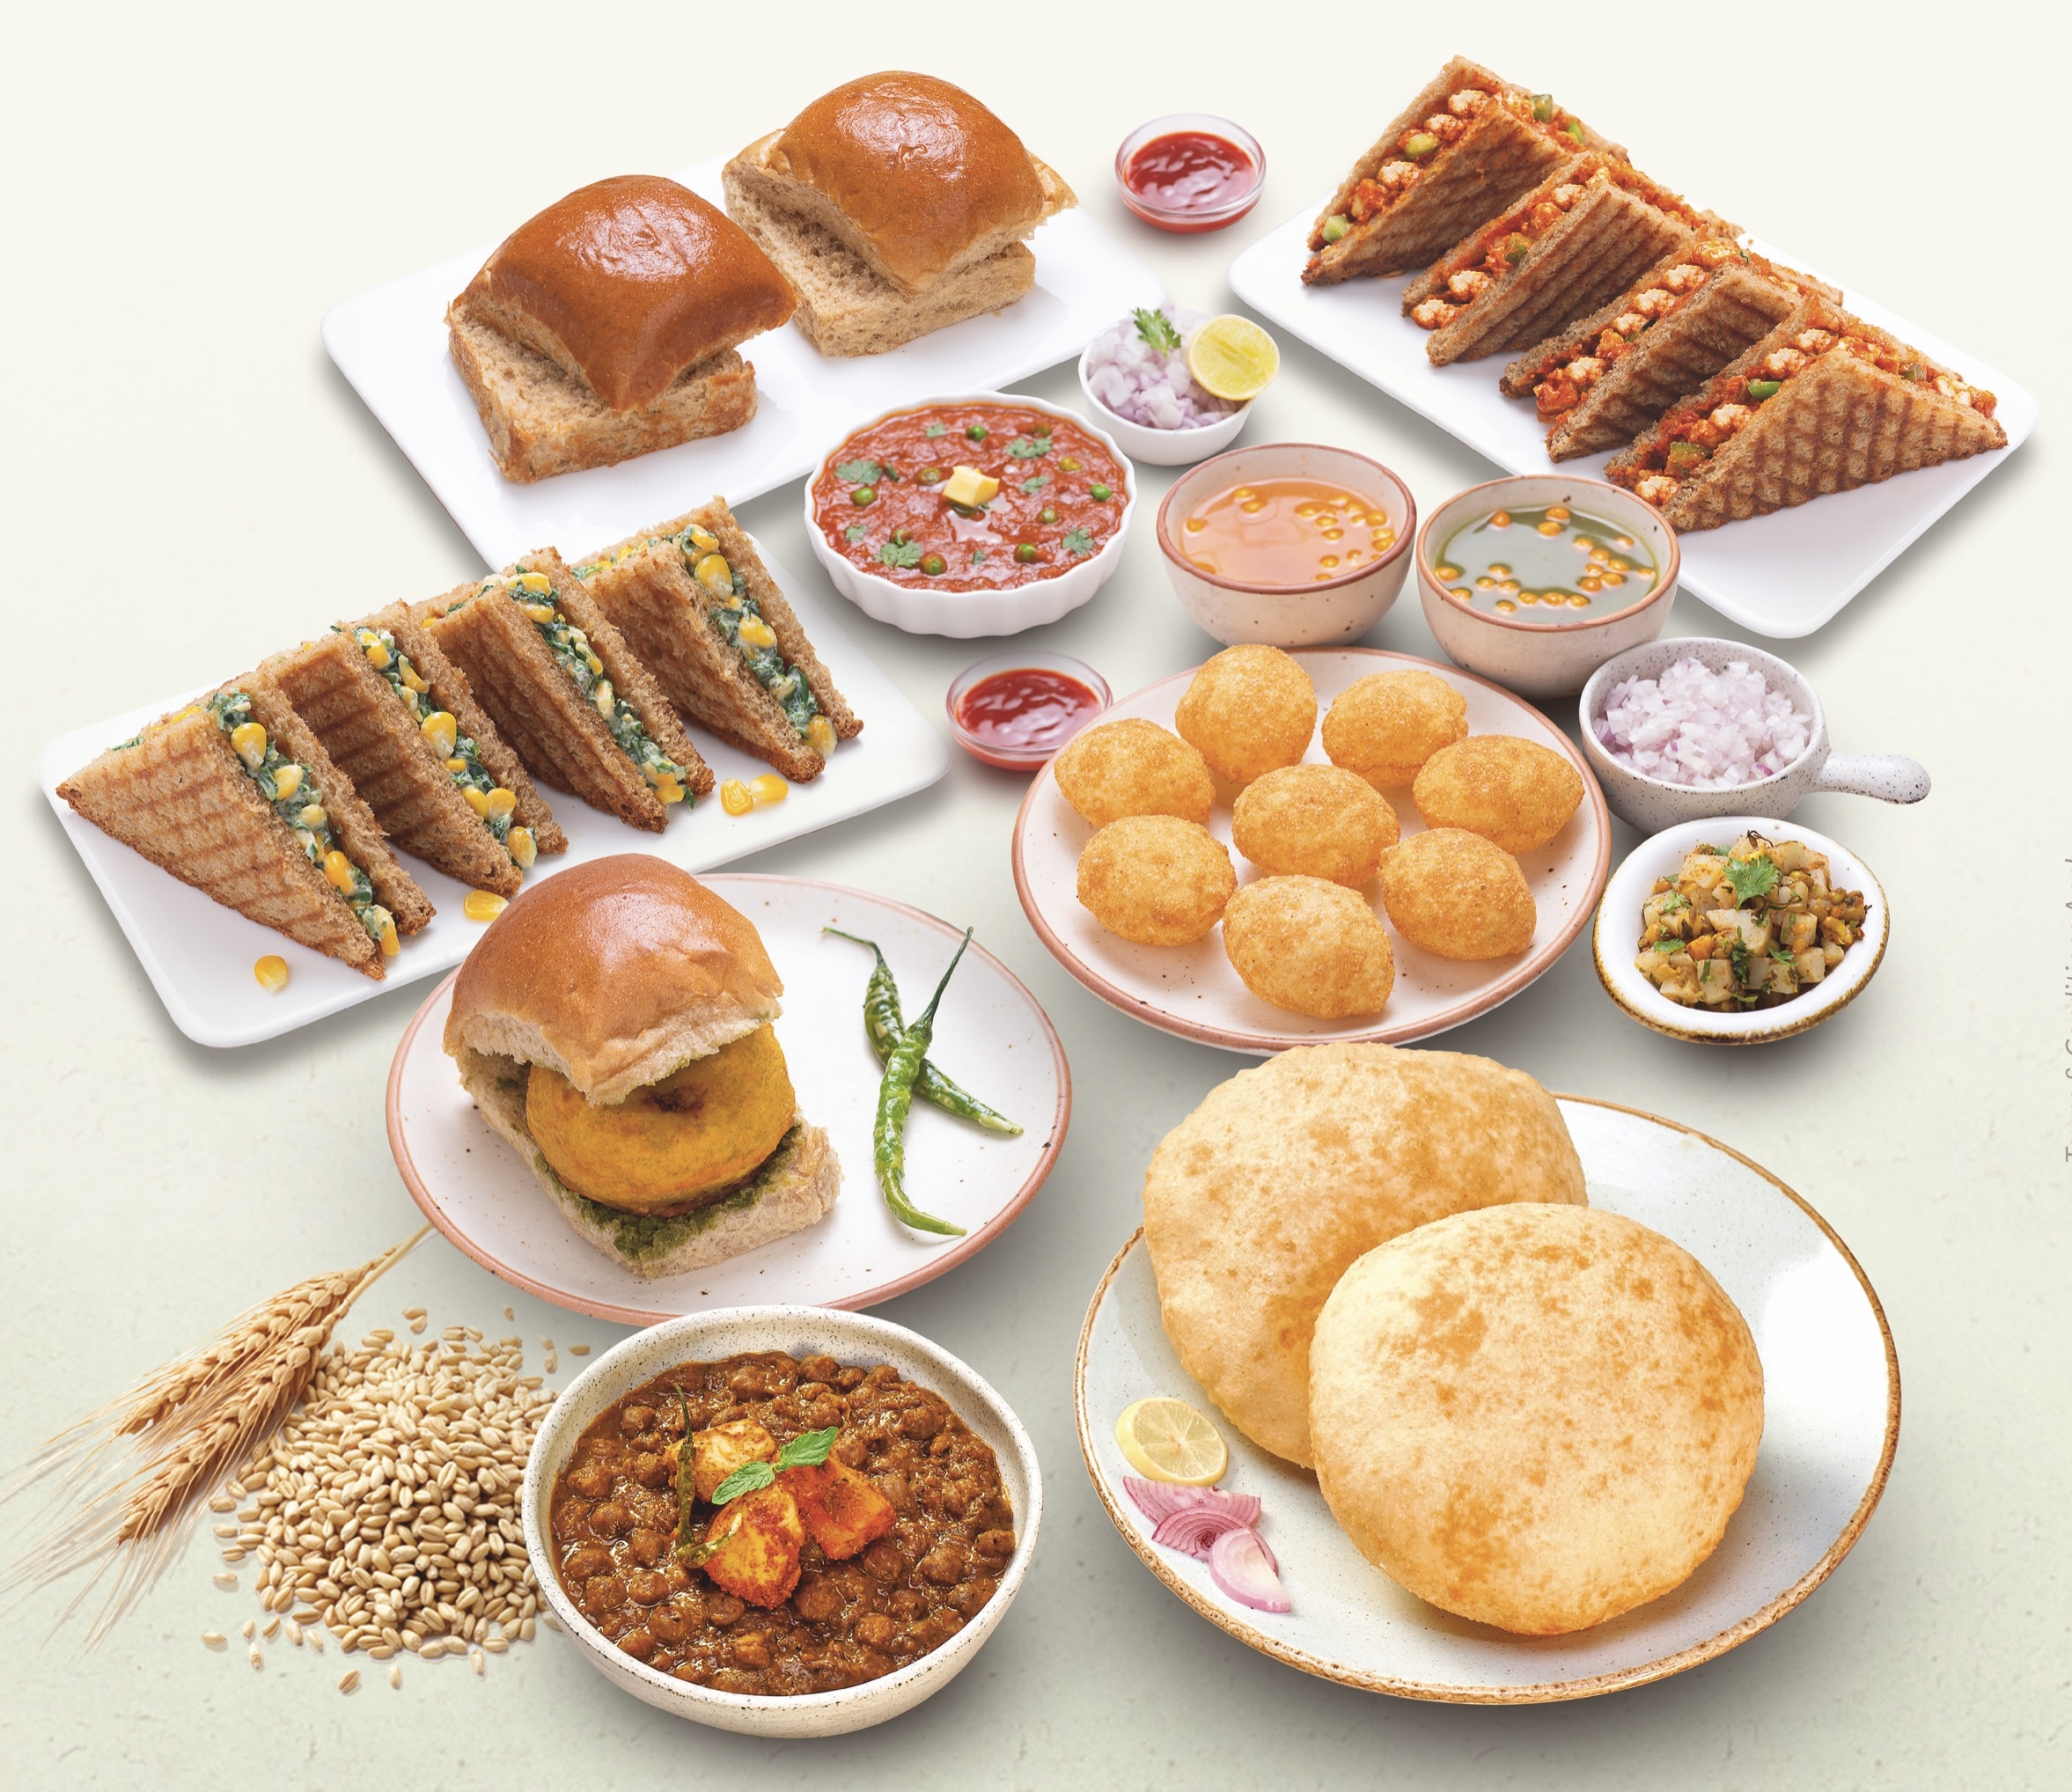 Haldiram’s Launches New Wheat-Based Dishes